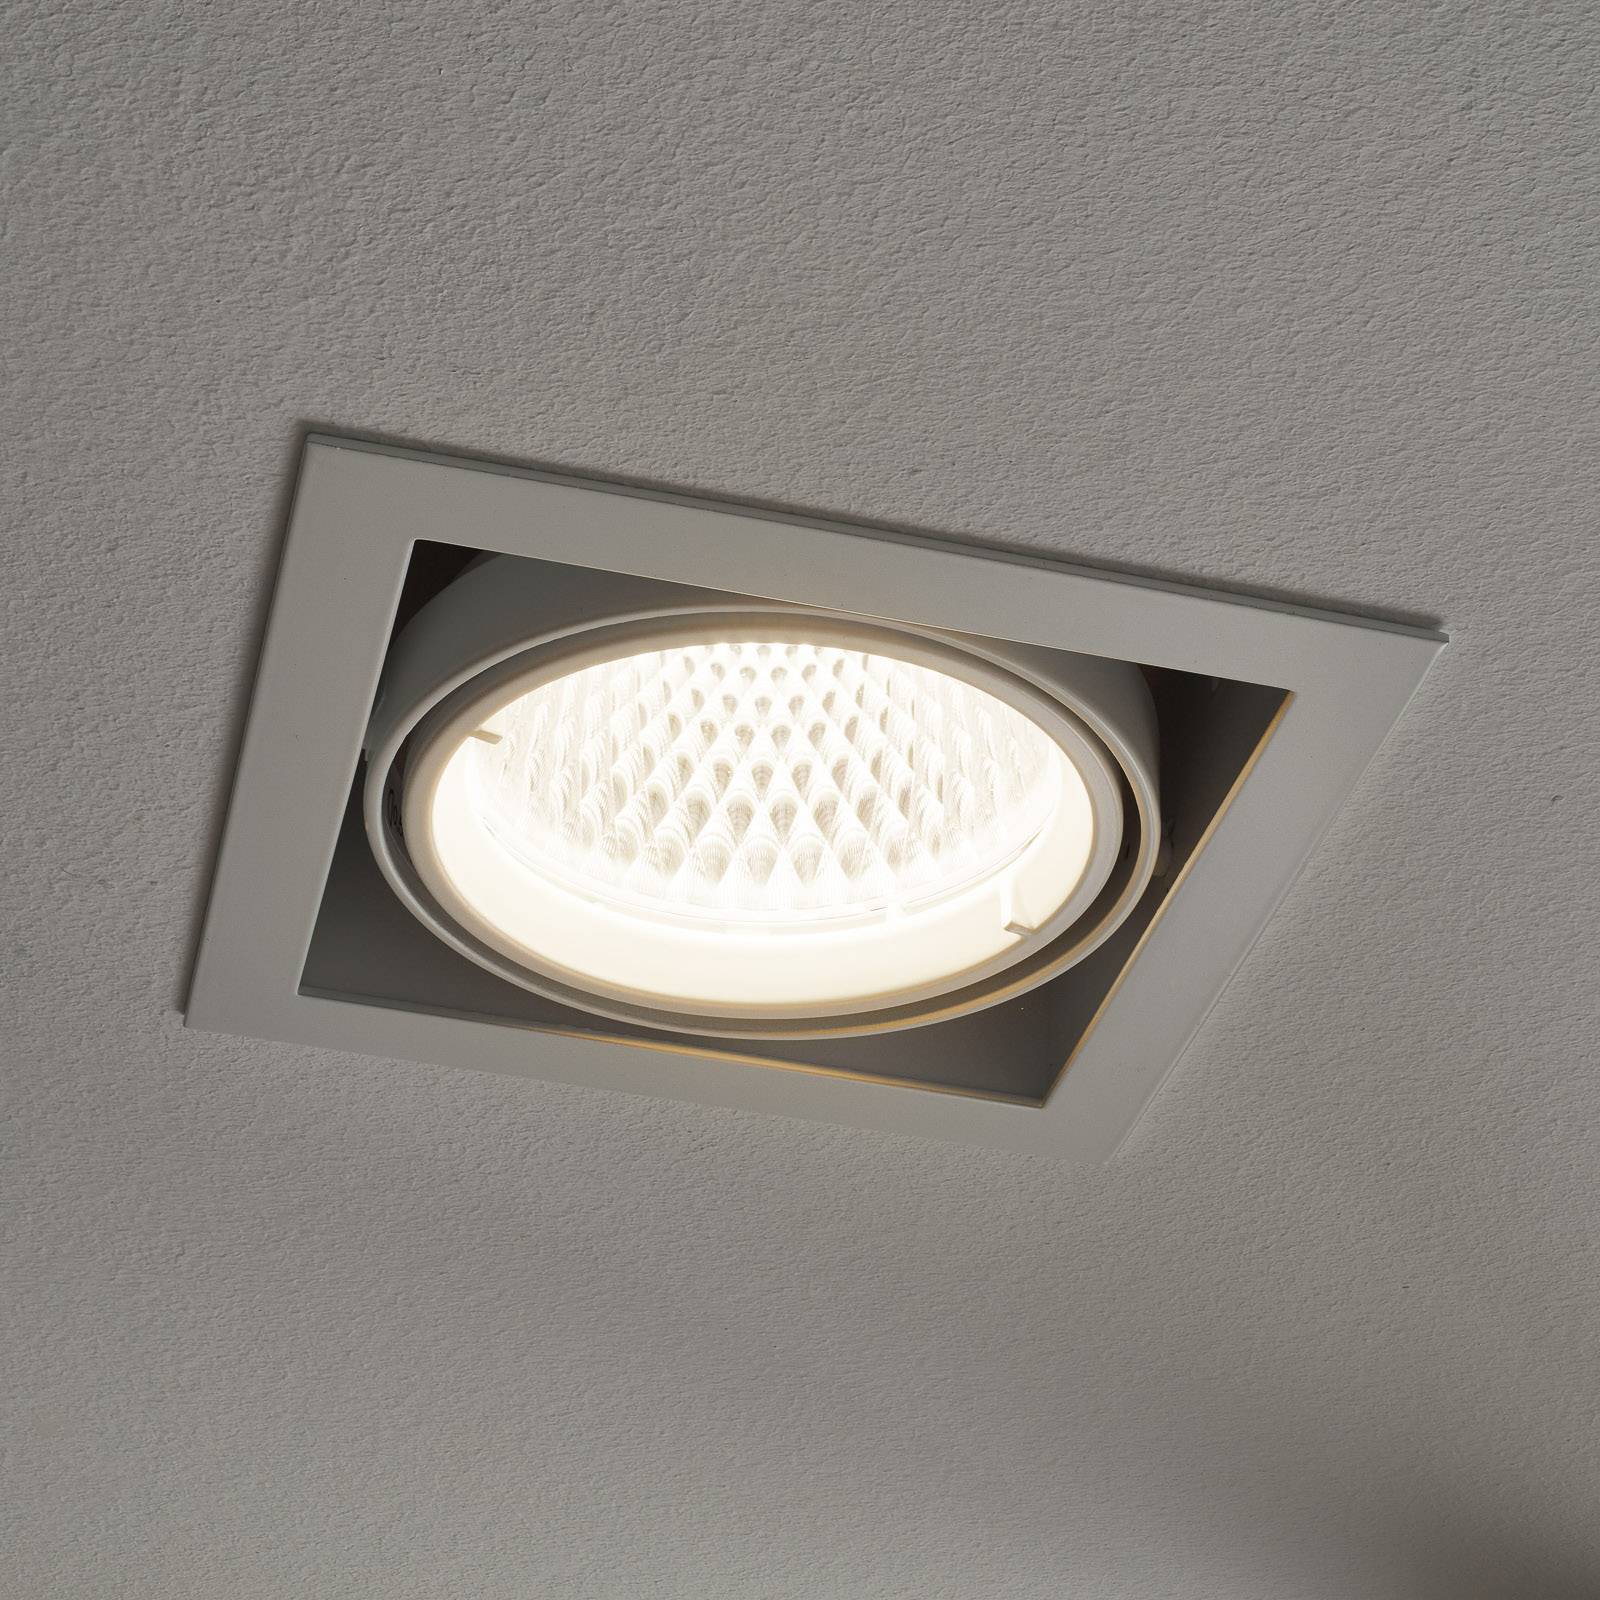 Image of Arcchio Adin lampe LED 4 000 K, 25,9 W, blanche 4251096570847